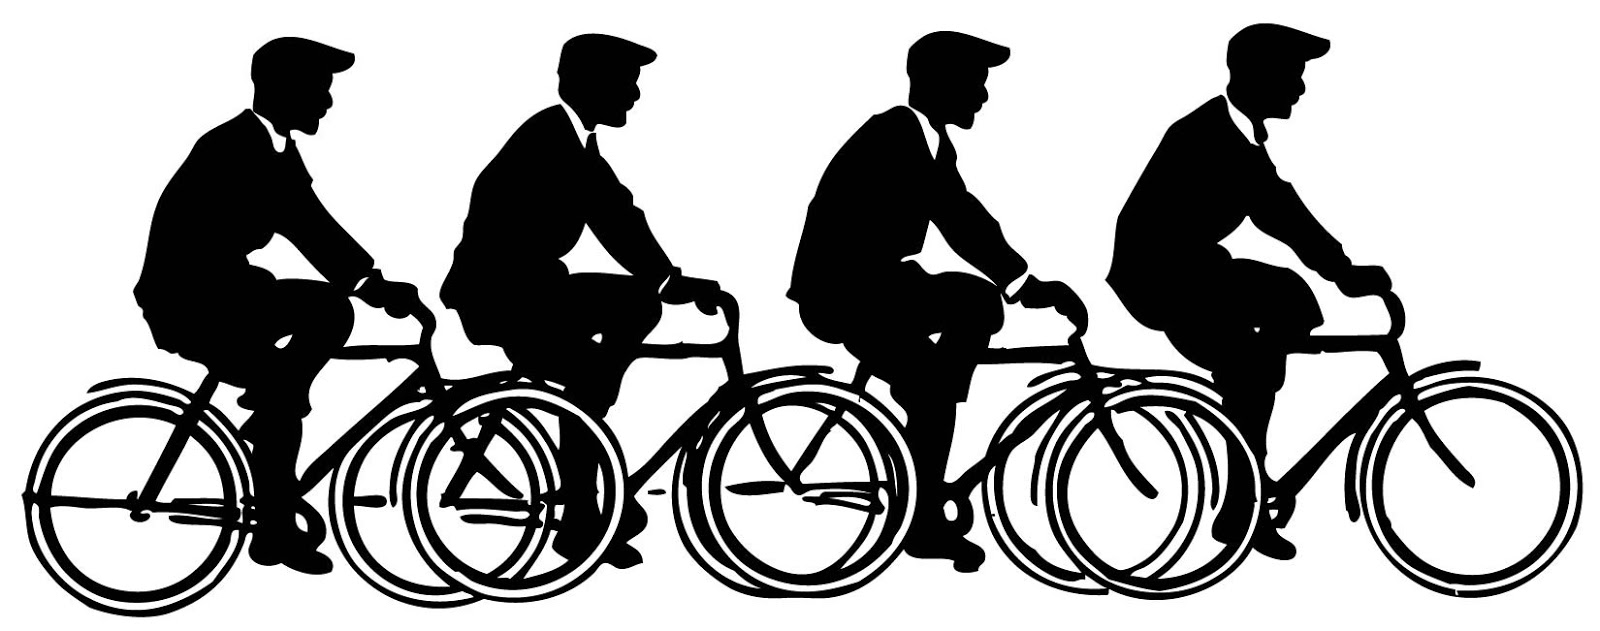 Vintage bicycle silhouette